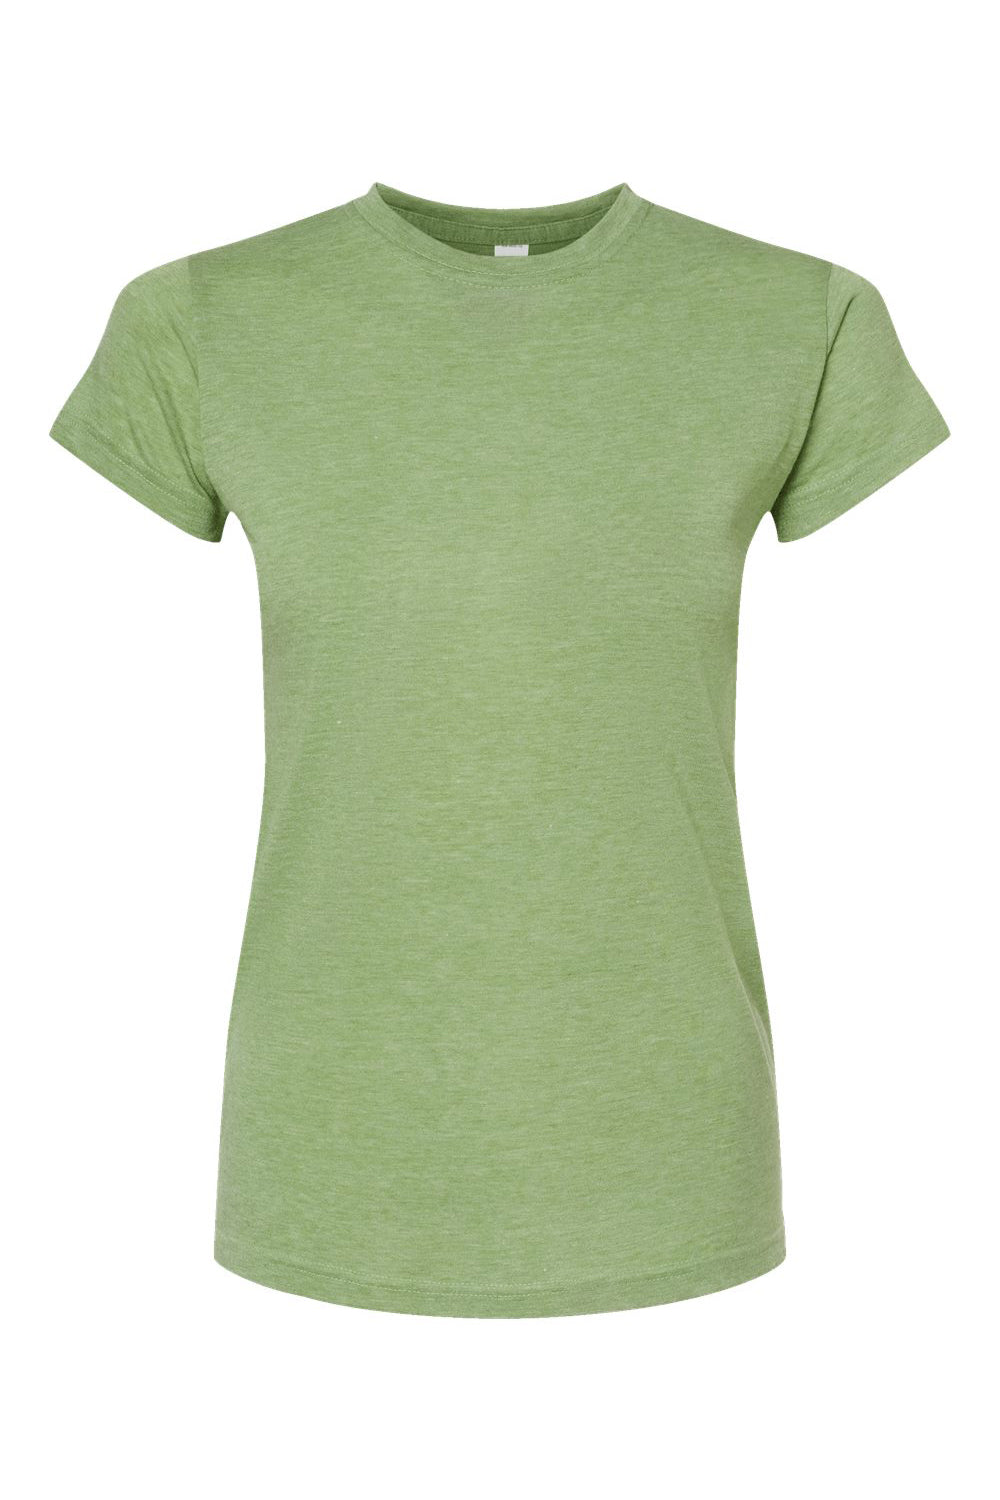 Tultex 240 Womens Poly-Rich Short Sleeve Crewneck T-Shirt Heather Green Flat Front